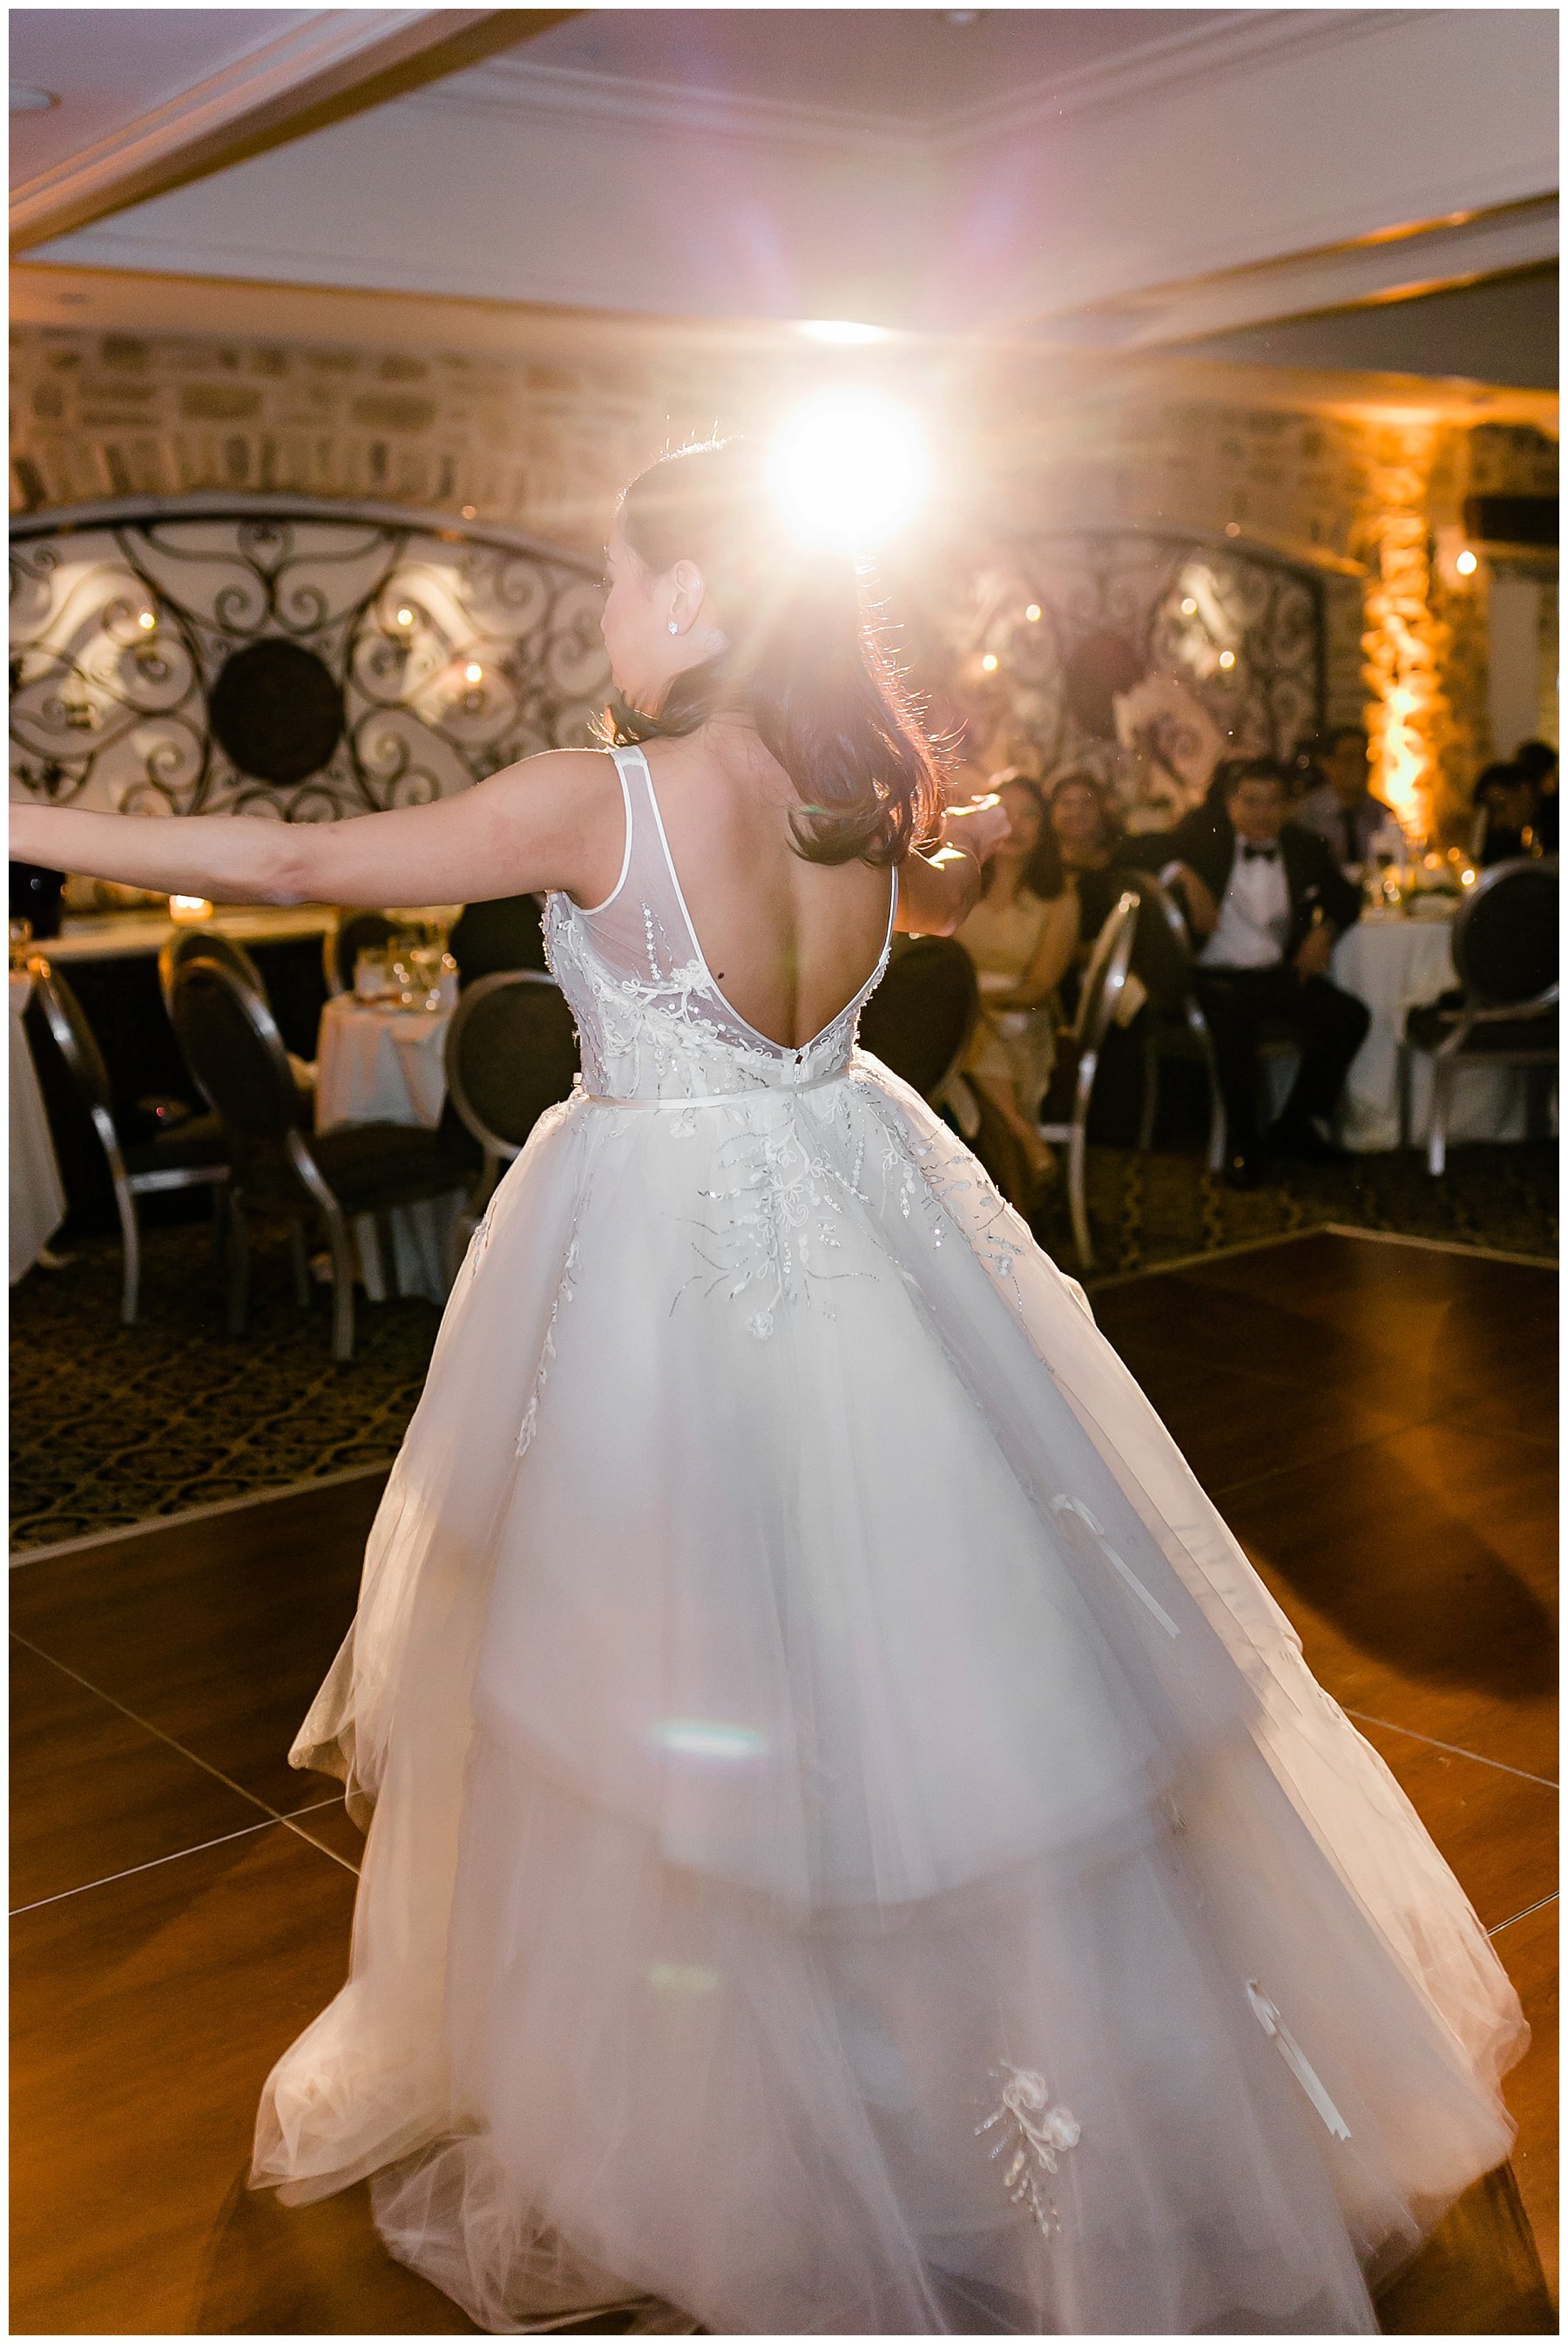  bride dancing at the reception 